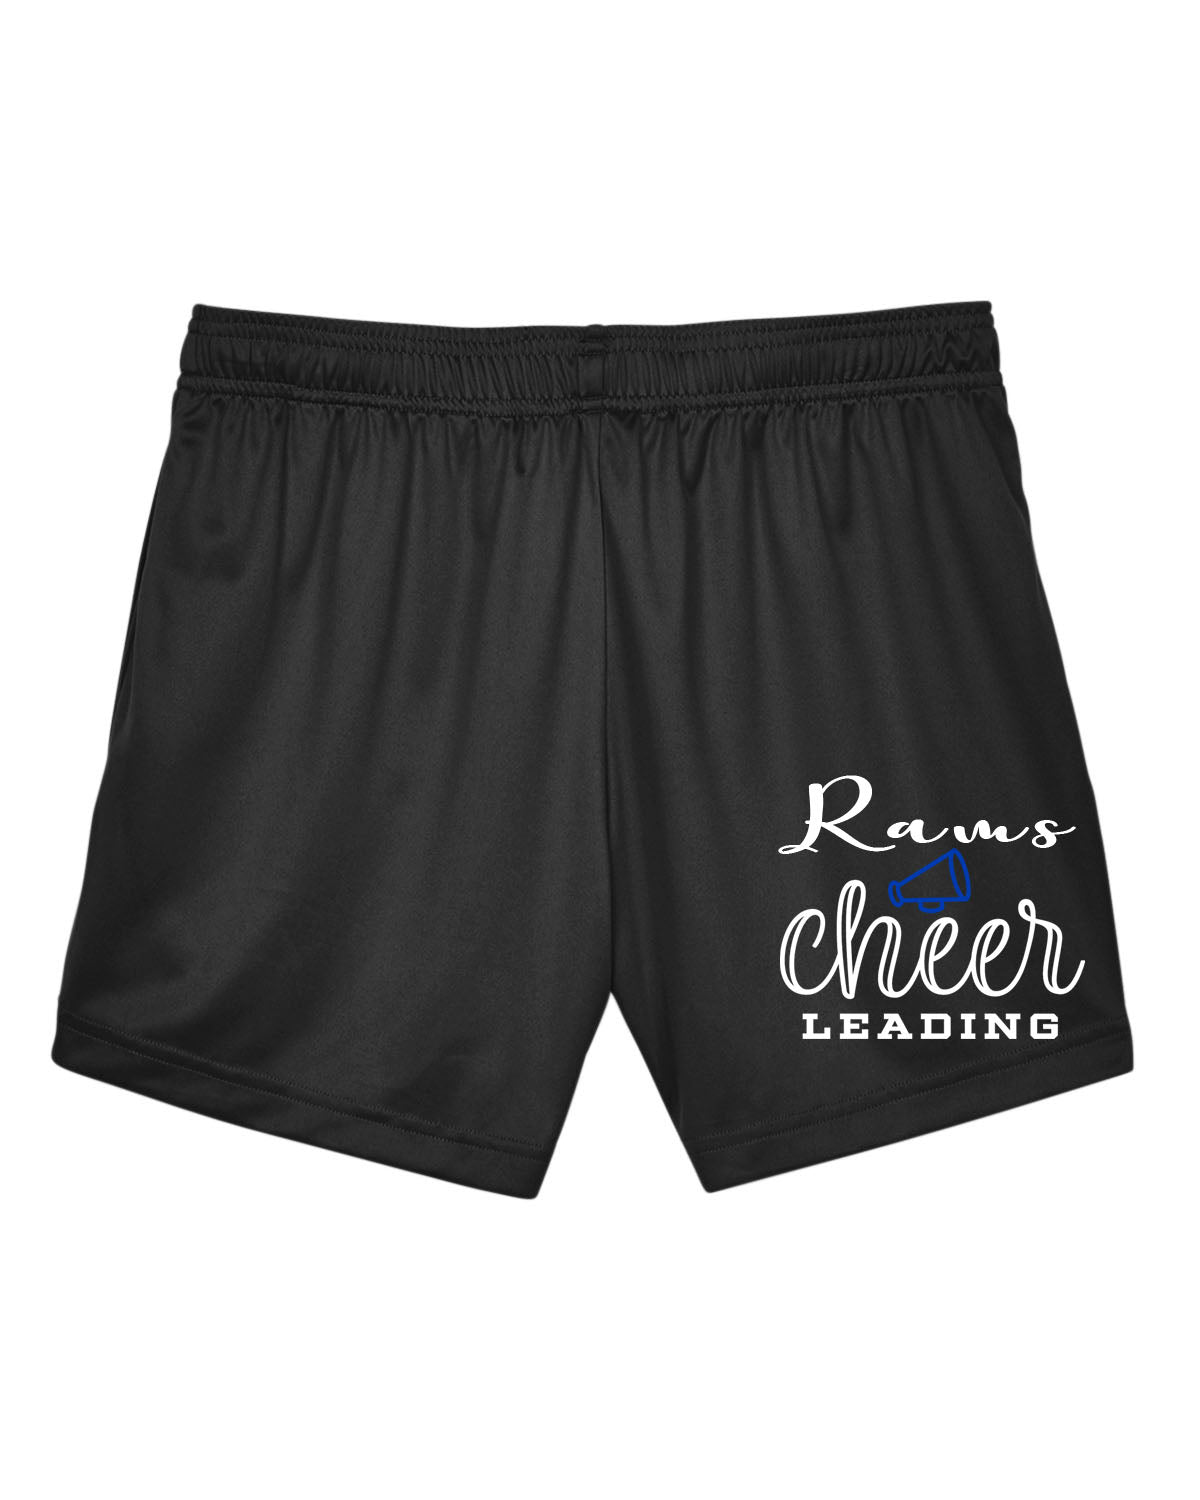 Franklin Cheer Ladies Performance Design 2 Shorts